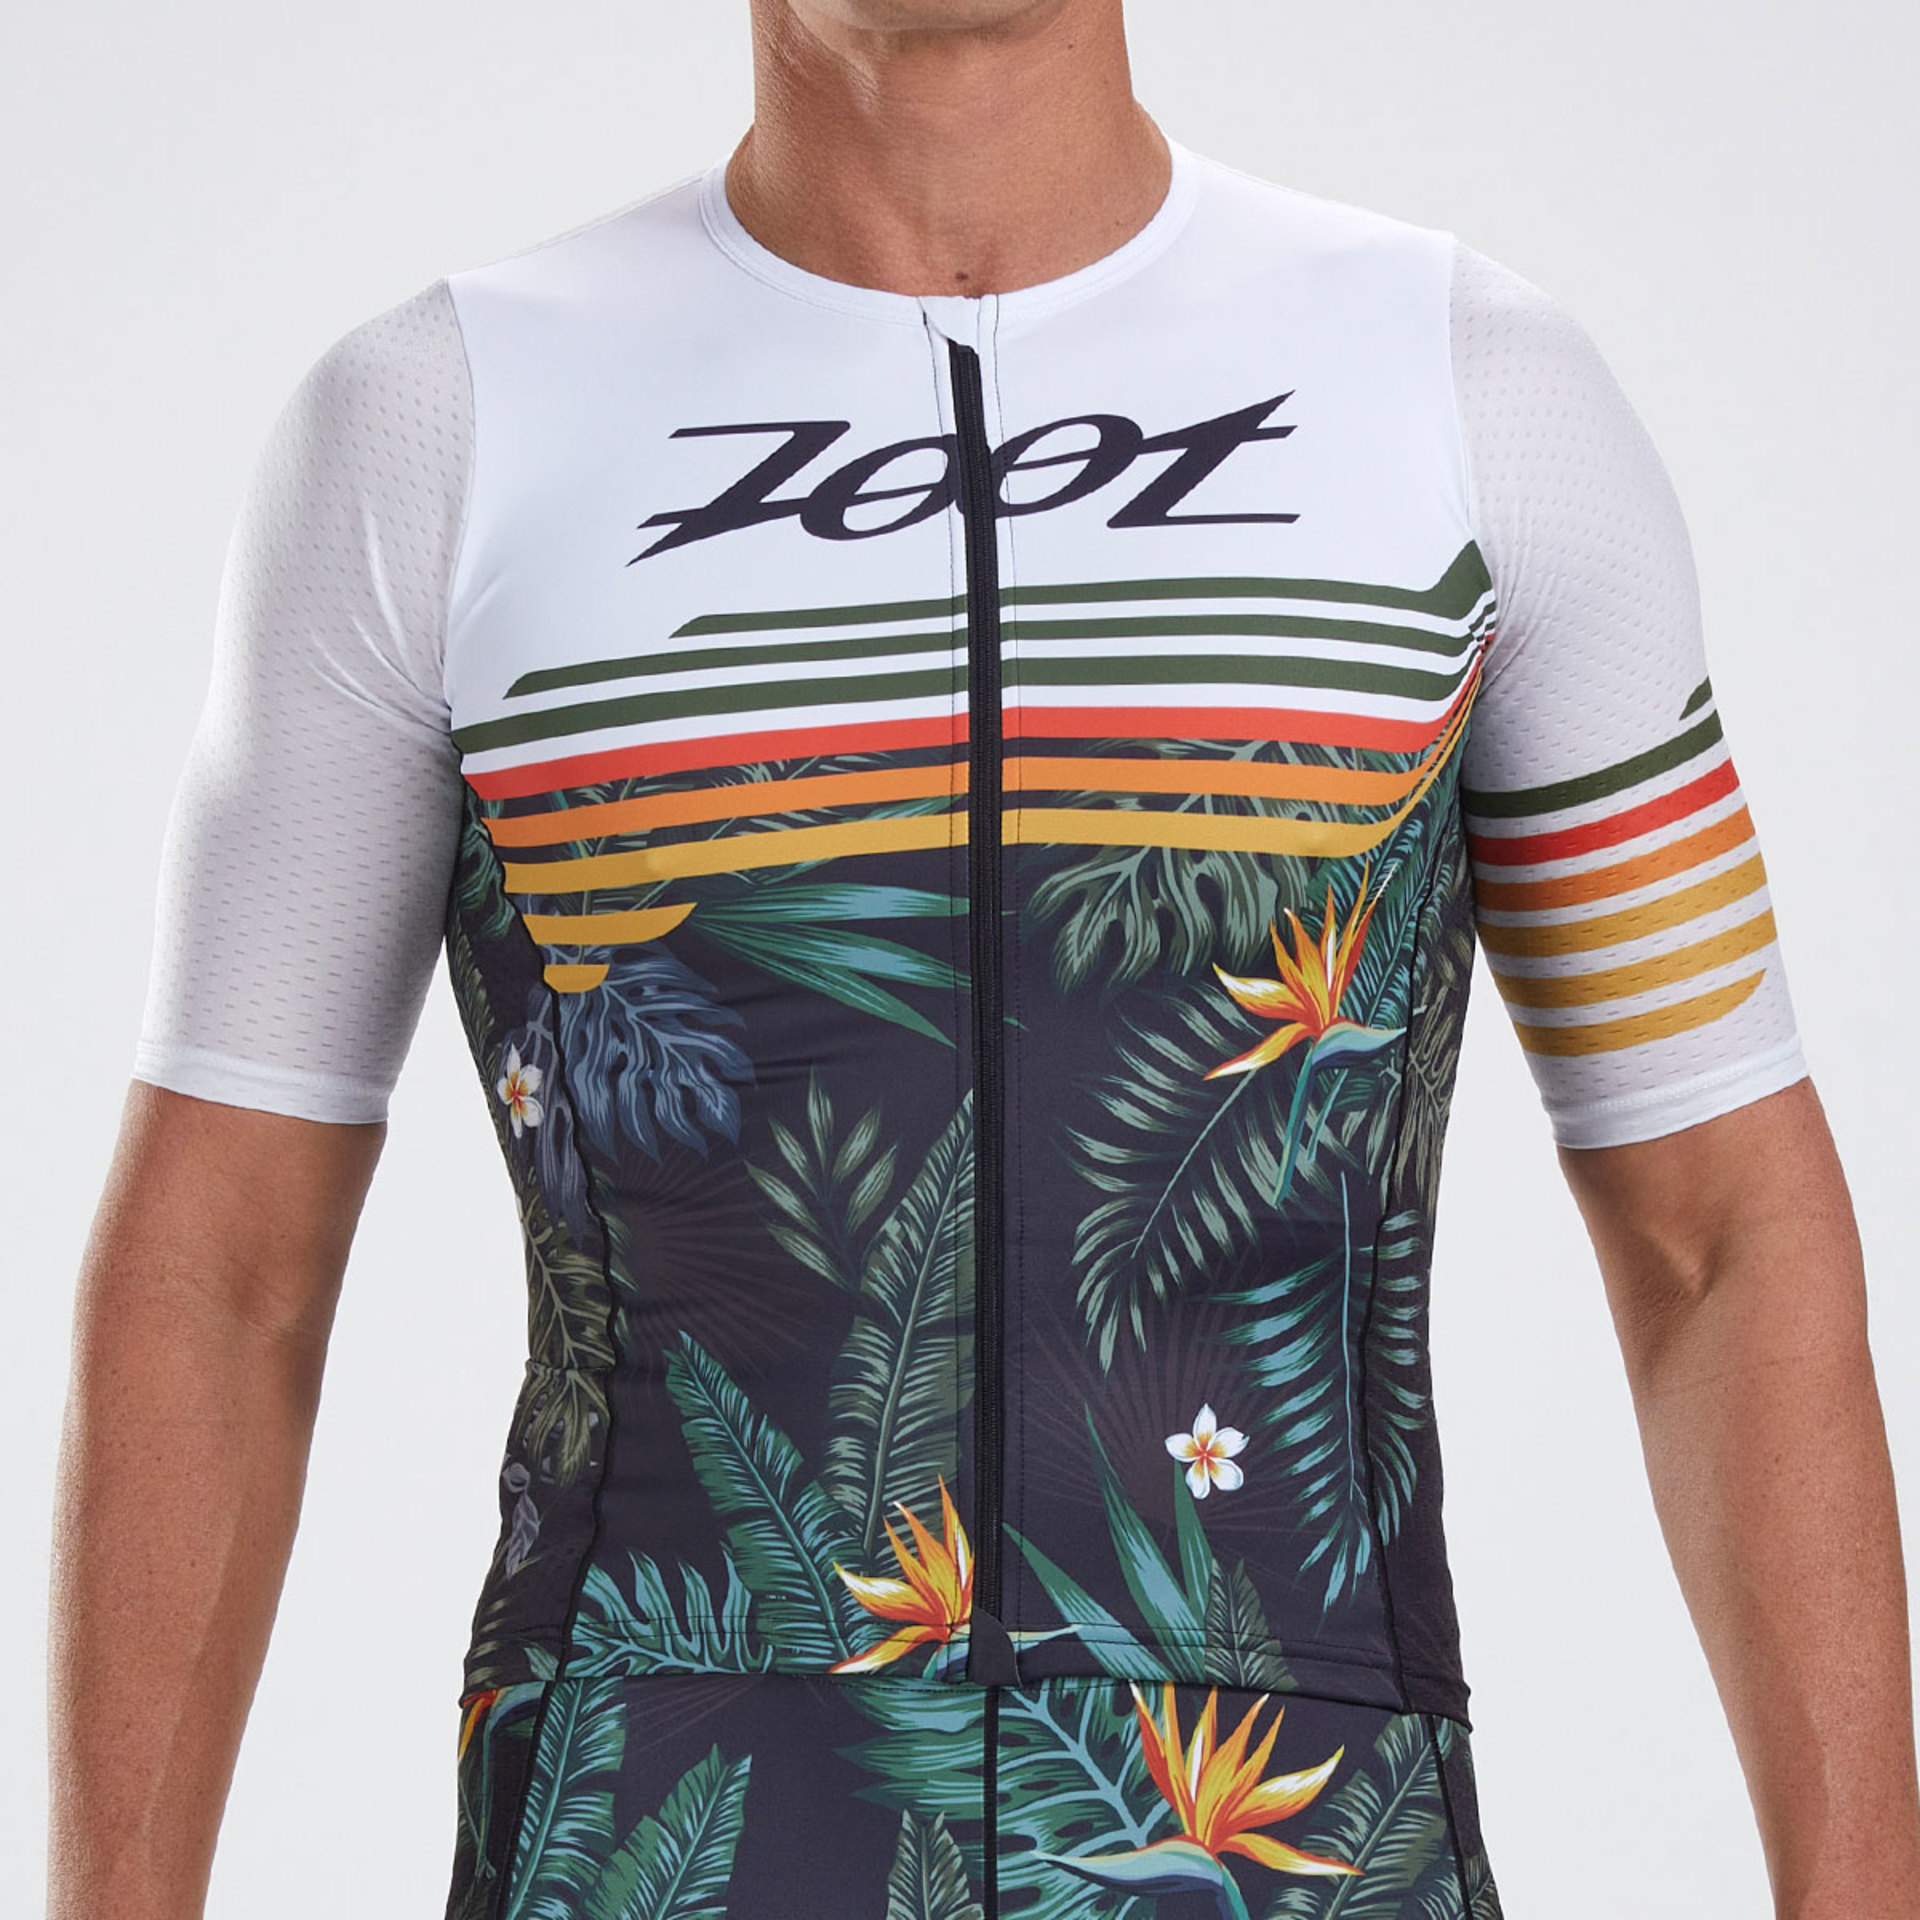 Zoot LTD Waikoloa Tri Aero Triathlonshirt Korte Mouwen Zwart/Wit/Groen/Oran